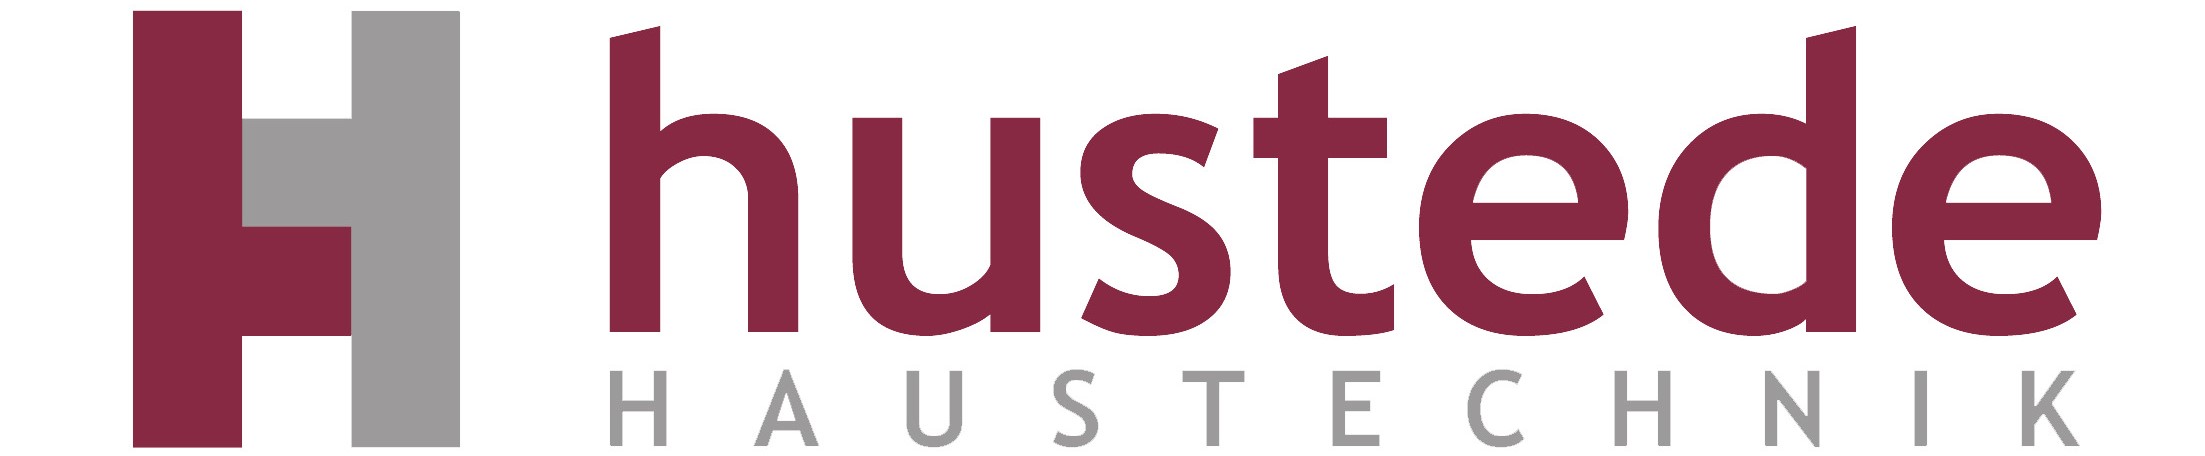 Hustede Haustechnik Logo